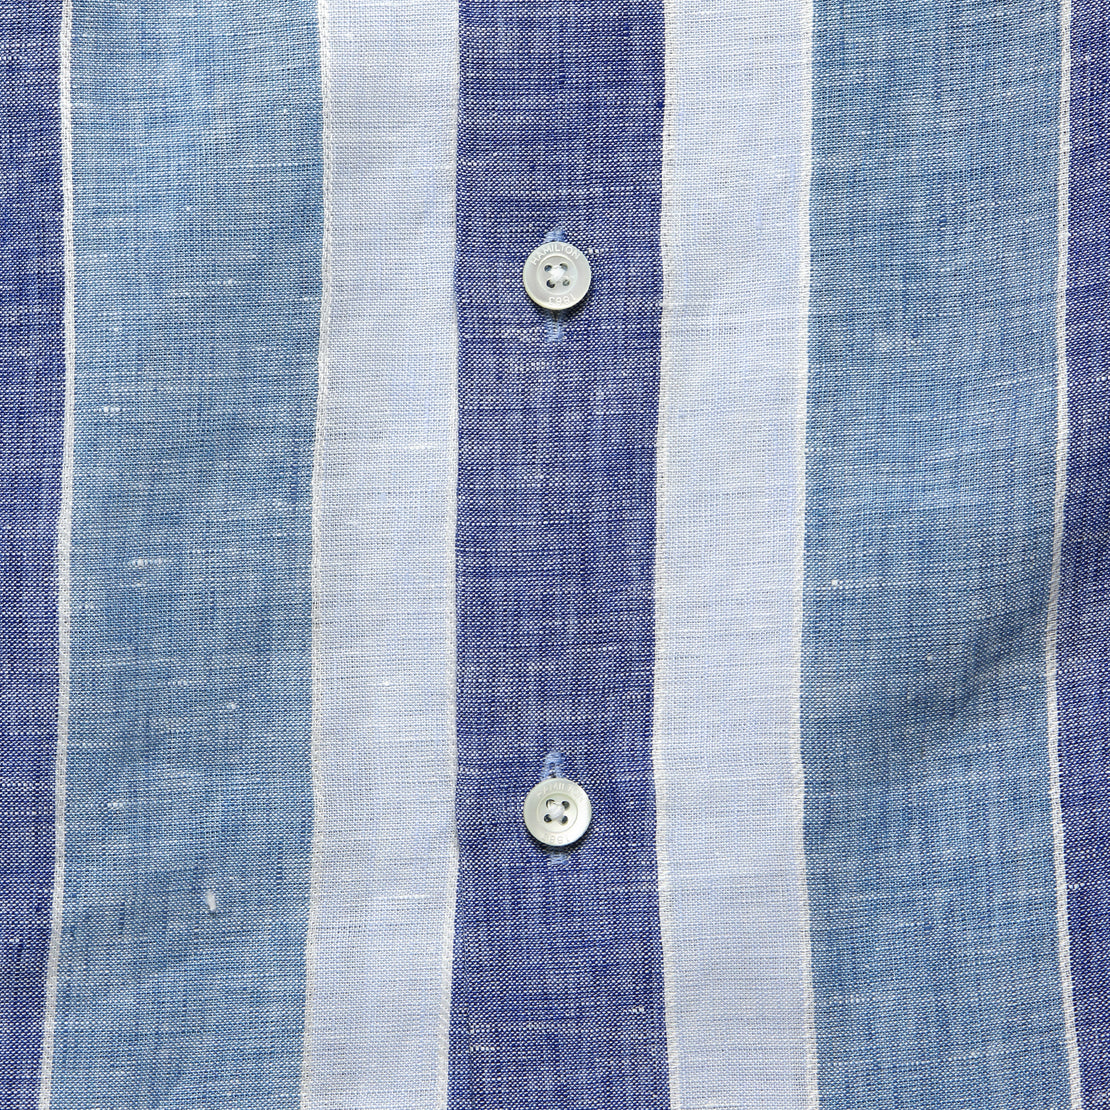 Wide Stripe Linen Camp Shirt - Blue/White - Hamilton Shirt Co. - STAG Provisions - Tops - S/S Woven - Stripe